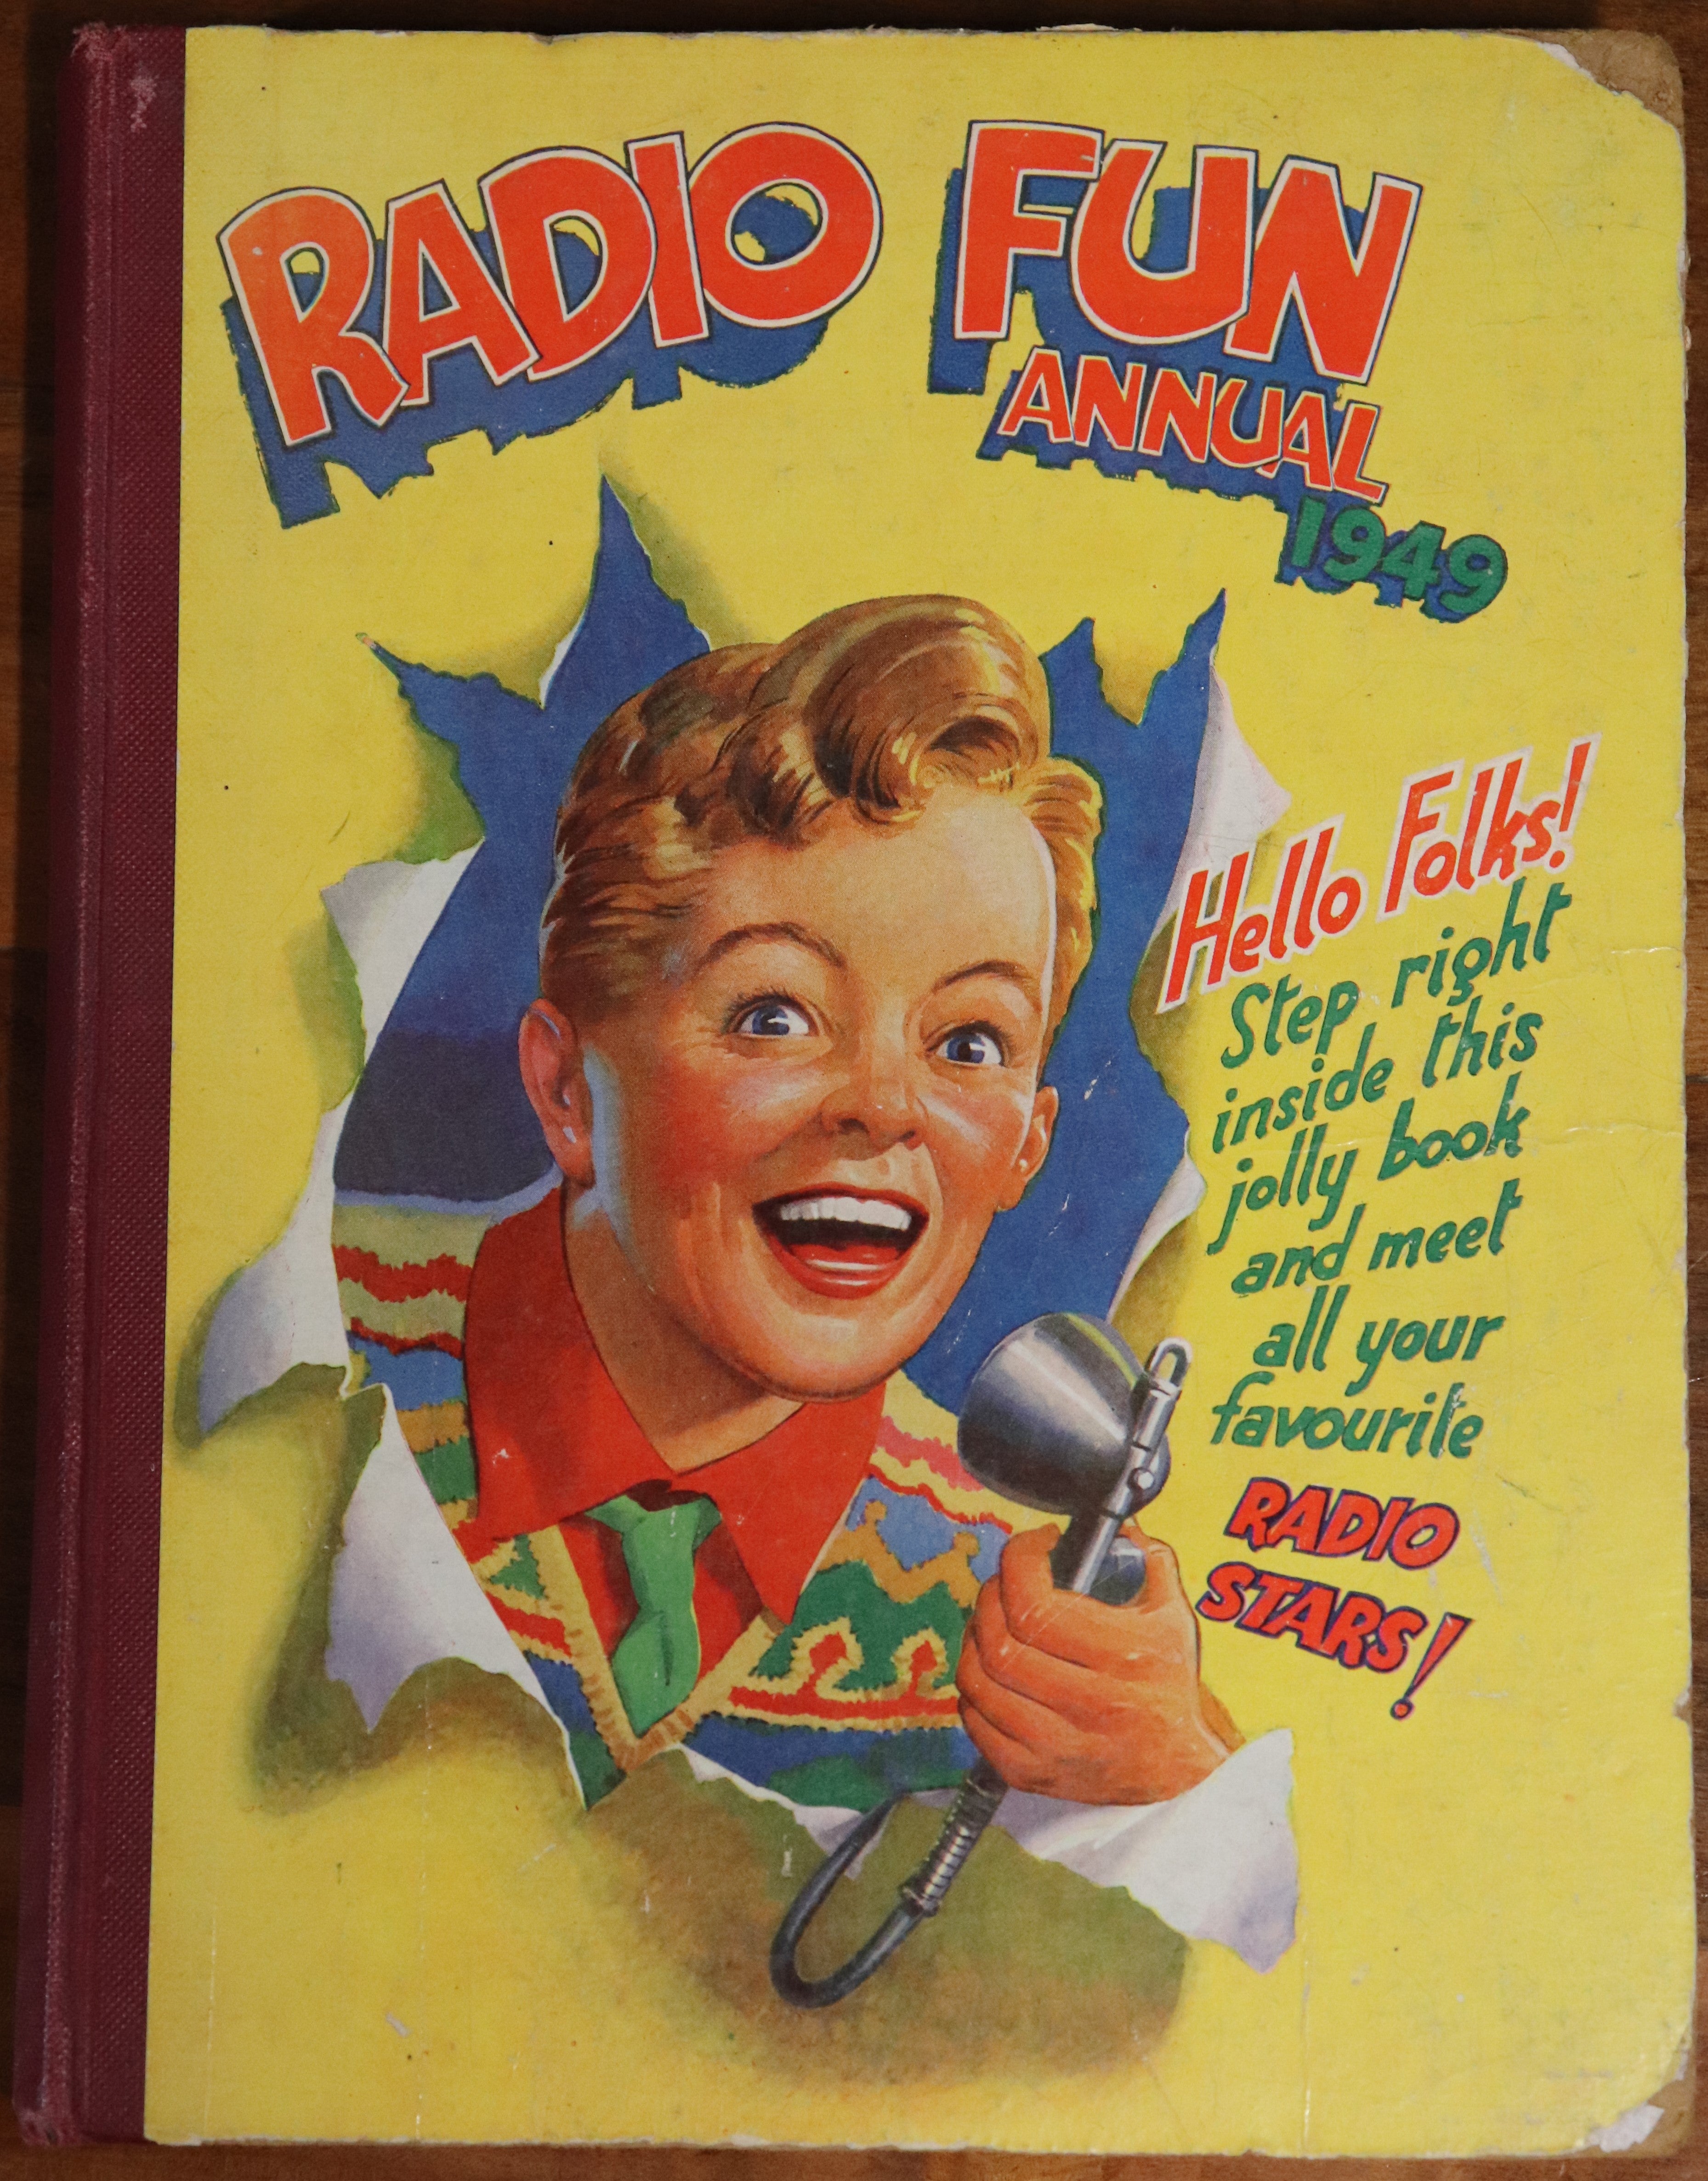 The Radio Fun Annual - 1949 - Antique Childrens Book